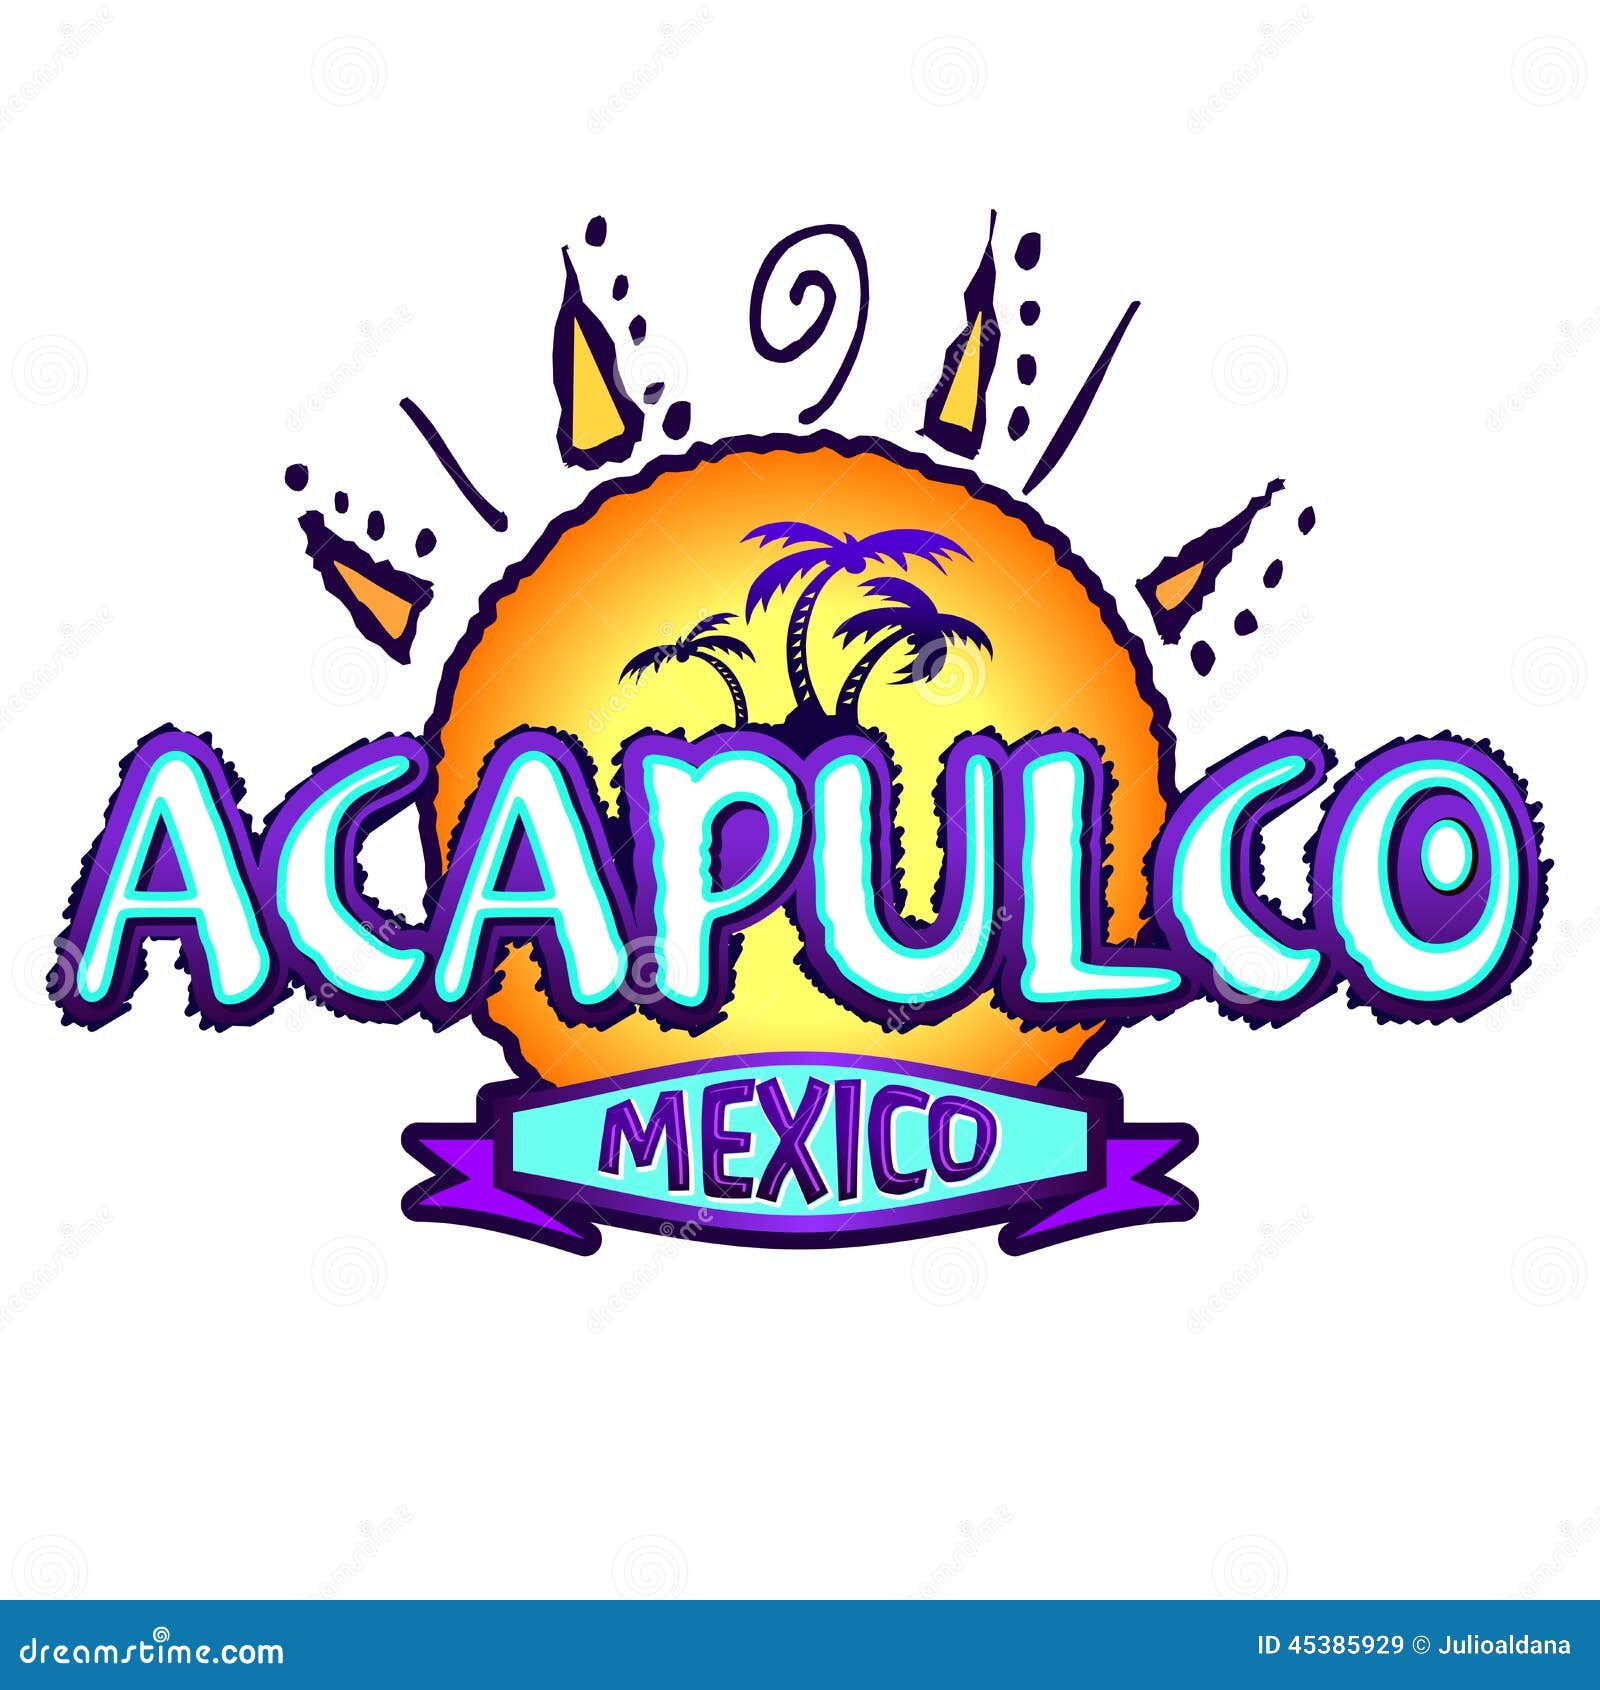 acapulco mexico - icon, emblem 